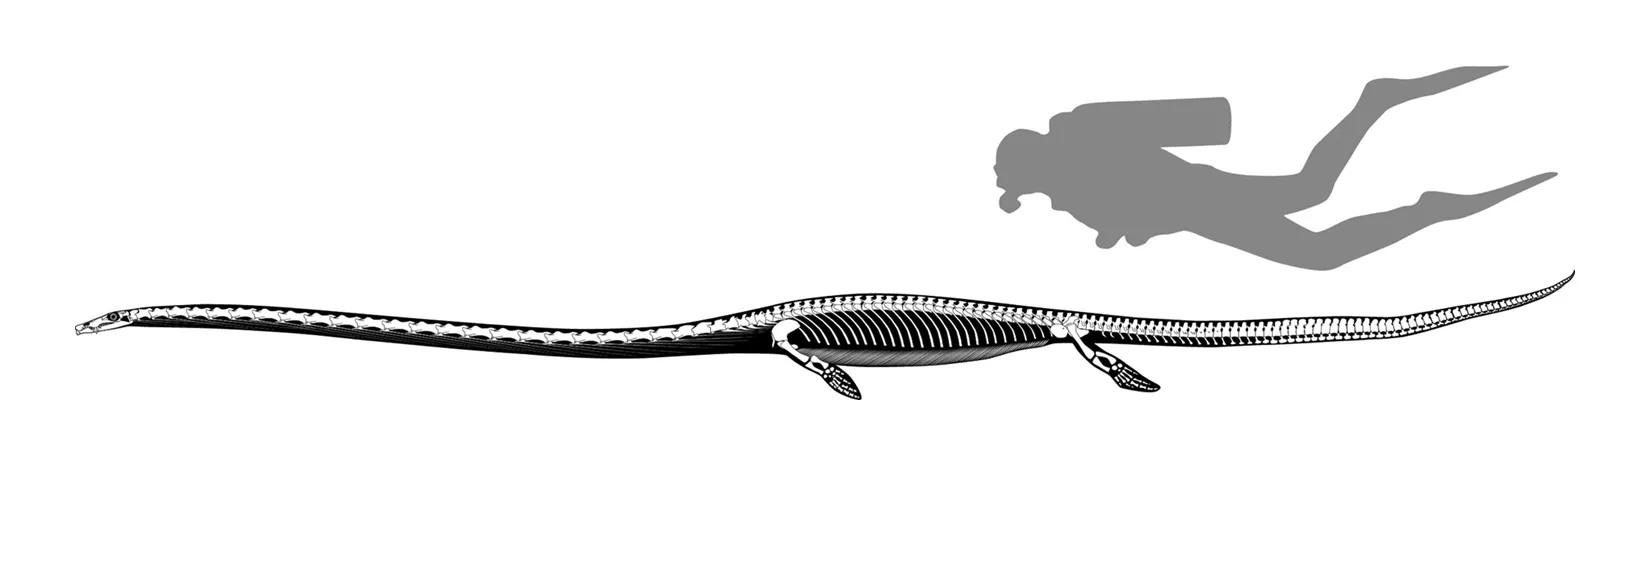 Dinocephalosaurus orientalis 